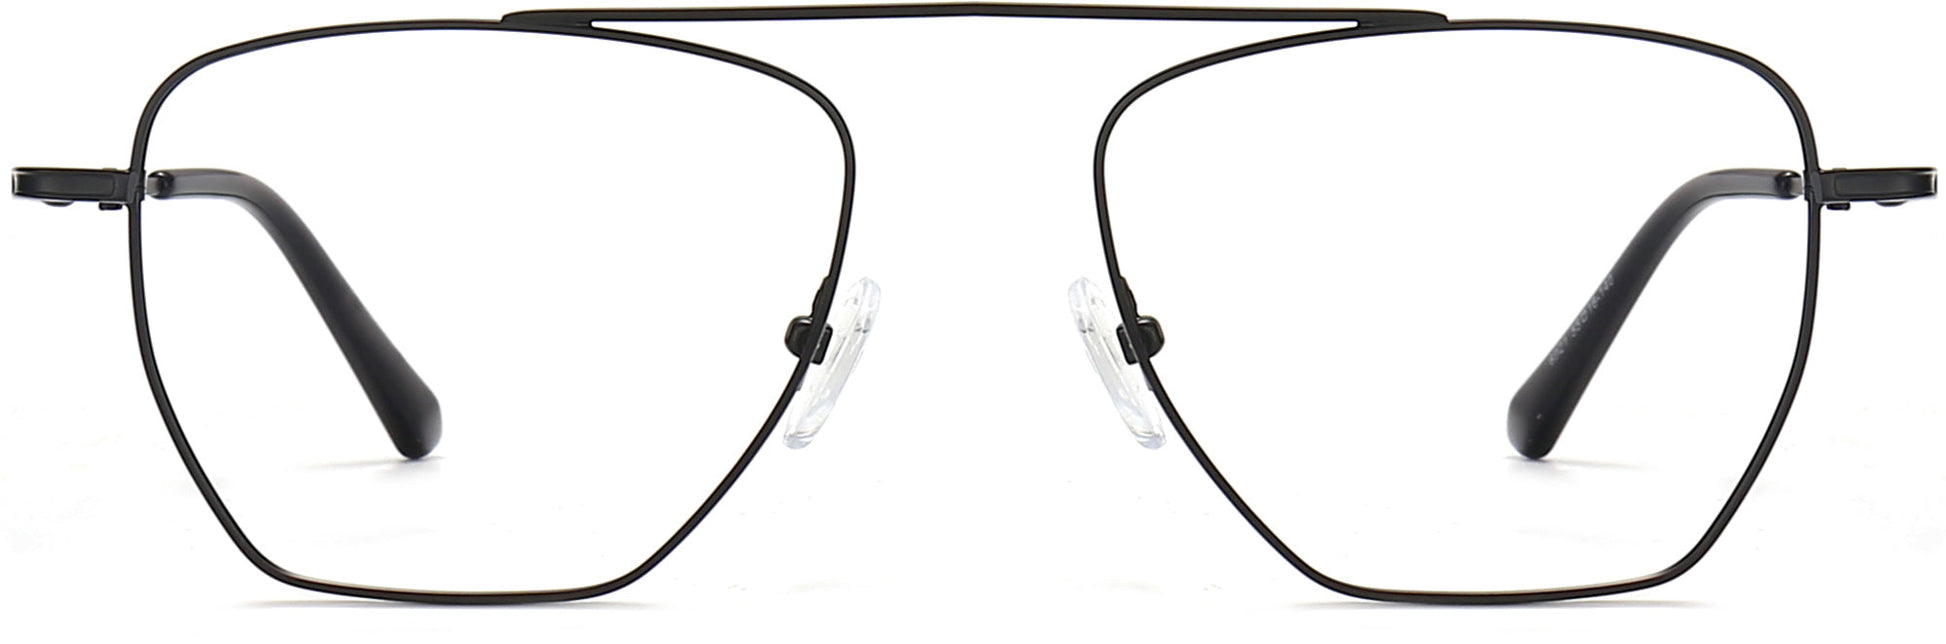 Alijah Geometric Black Eyeglasses from ANRRI, front view